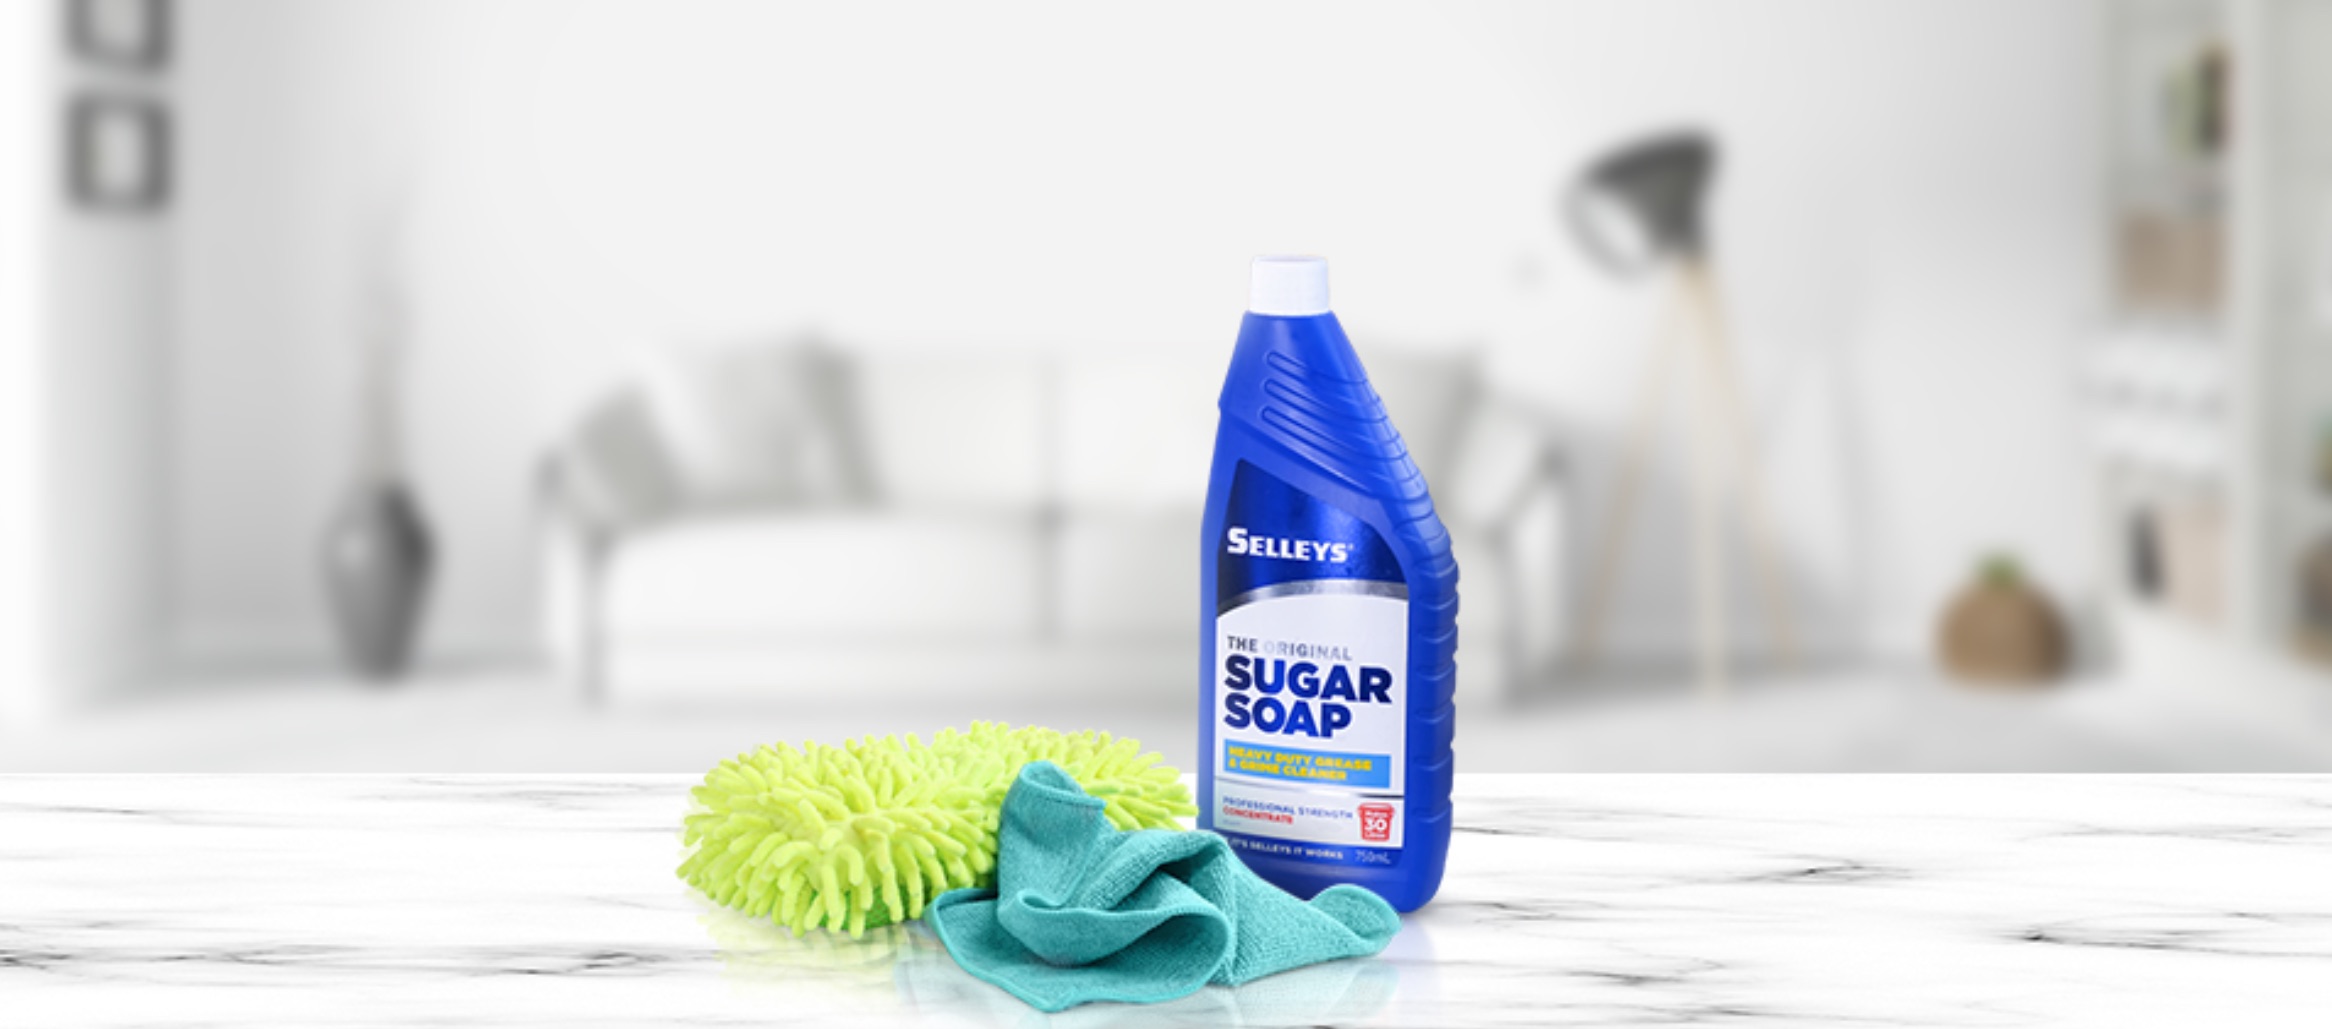 Selleys Original Sugar Soap - Heavy Duty Grease & Grime Cleaner